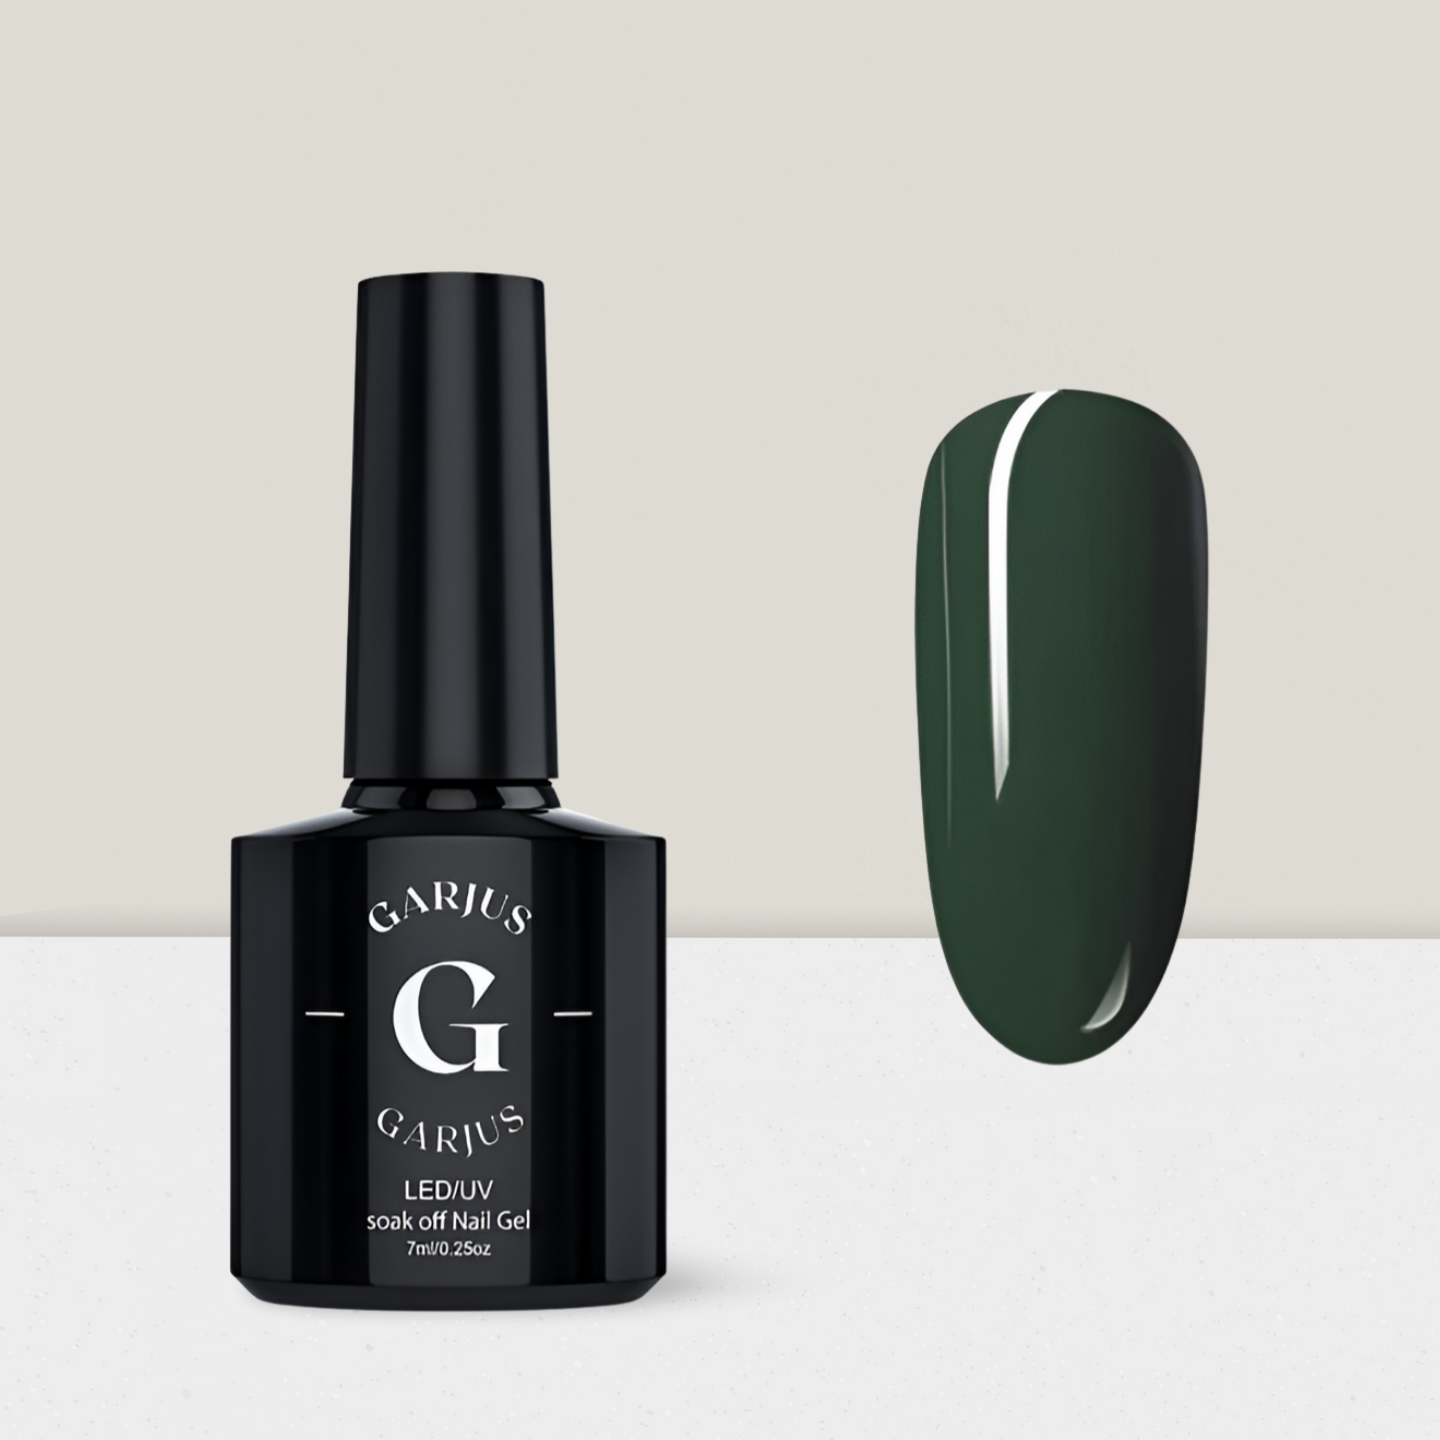 olive green nail gel polish garjus 072